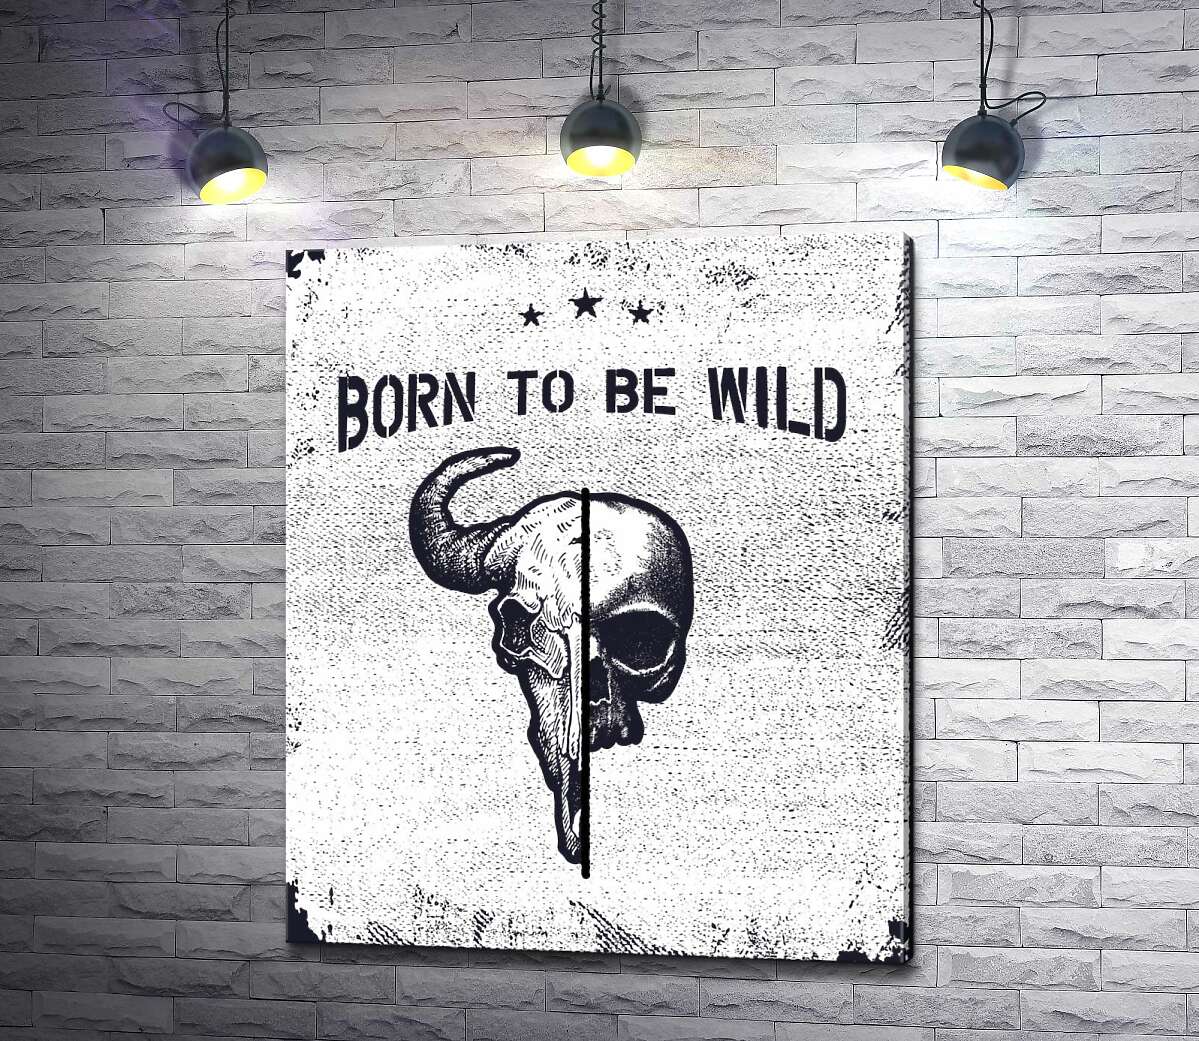 картина Соединение черепов человека и быка под фразой "born to be wild"